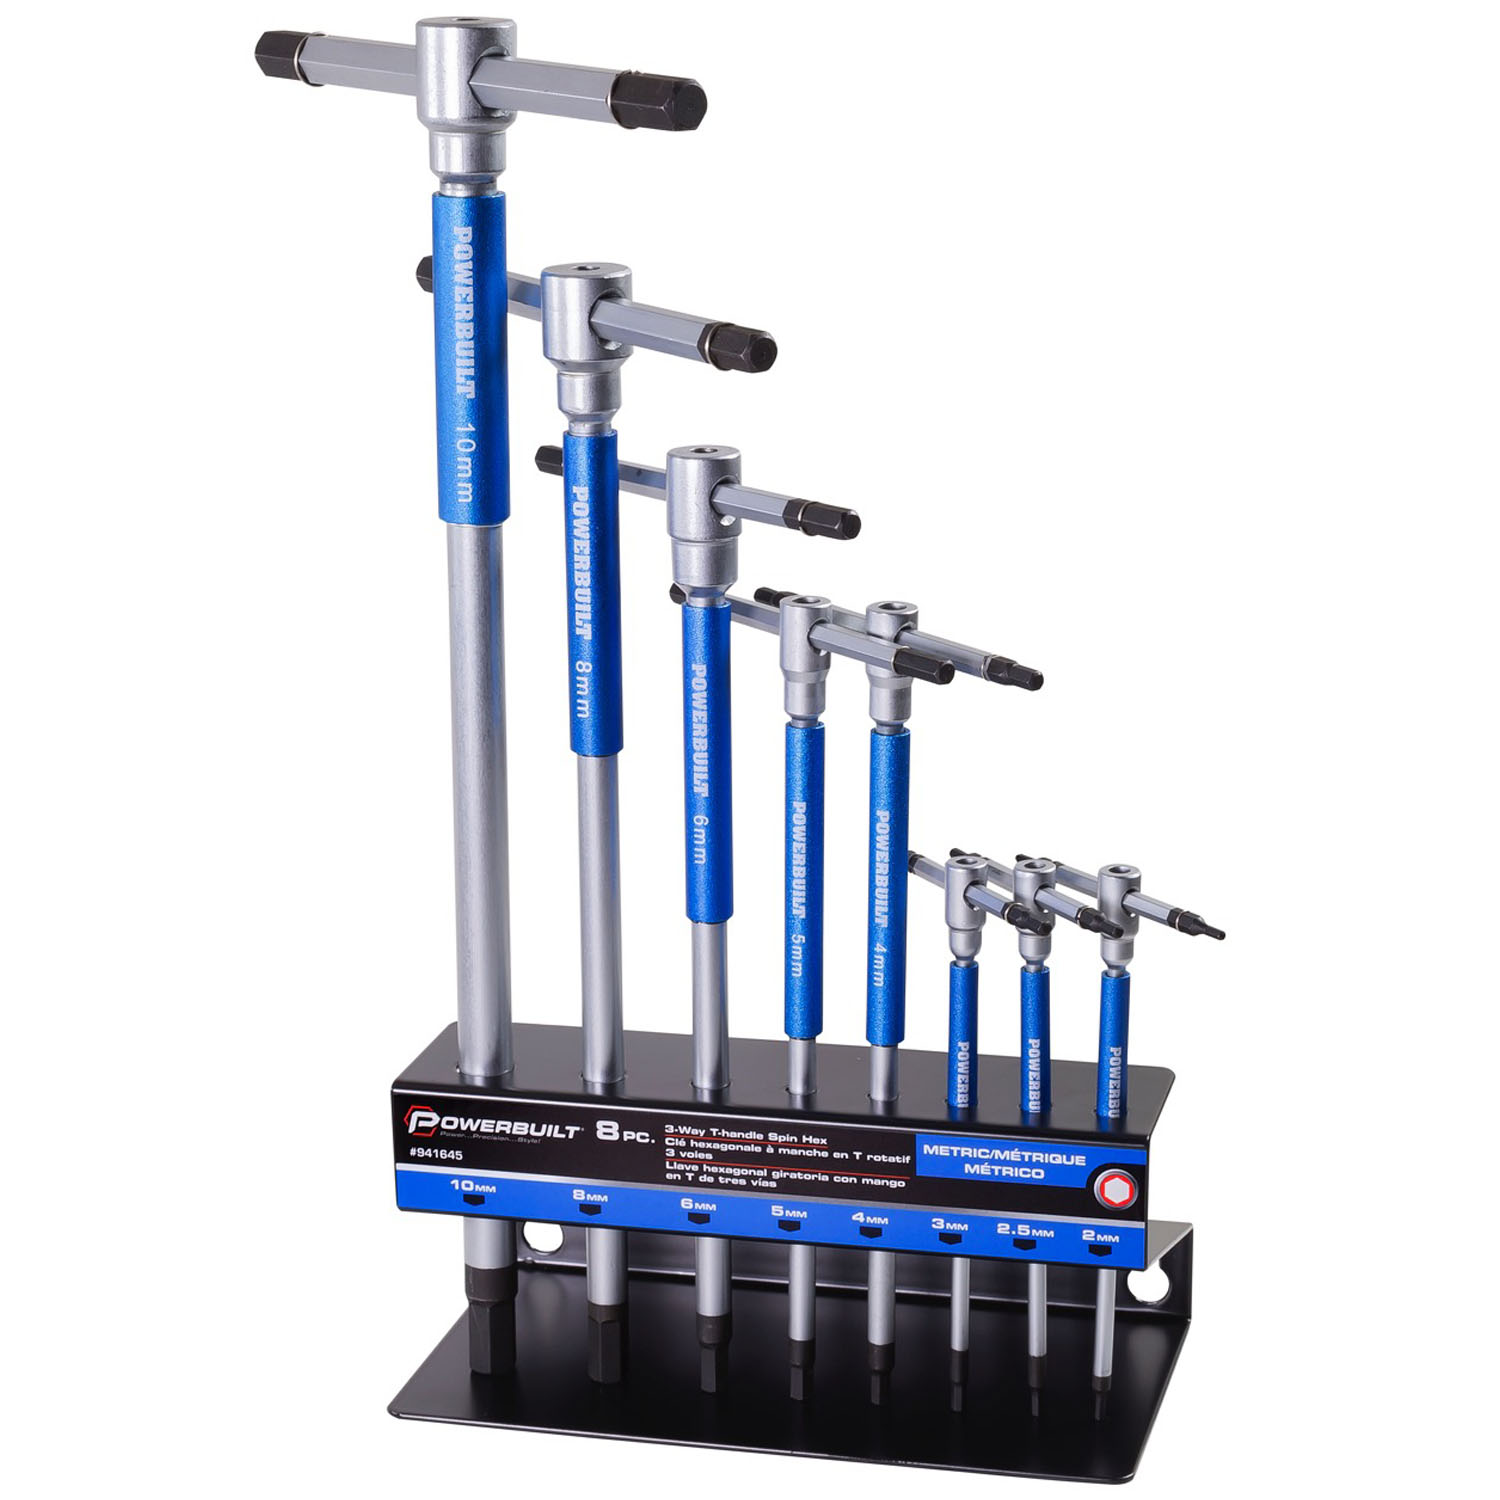 Powerbuilt 8 Pc Metric T-Handle Hex Allen Key Wrench Set w/Storage Rack - 941645 - image 1 of 5